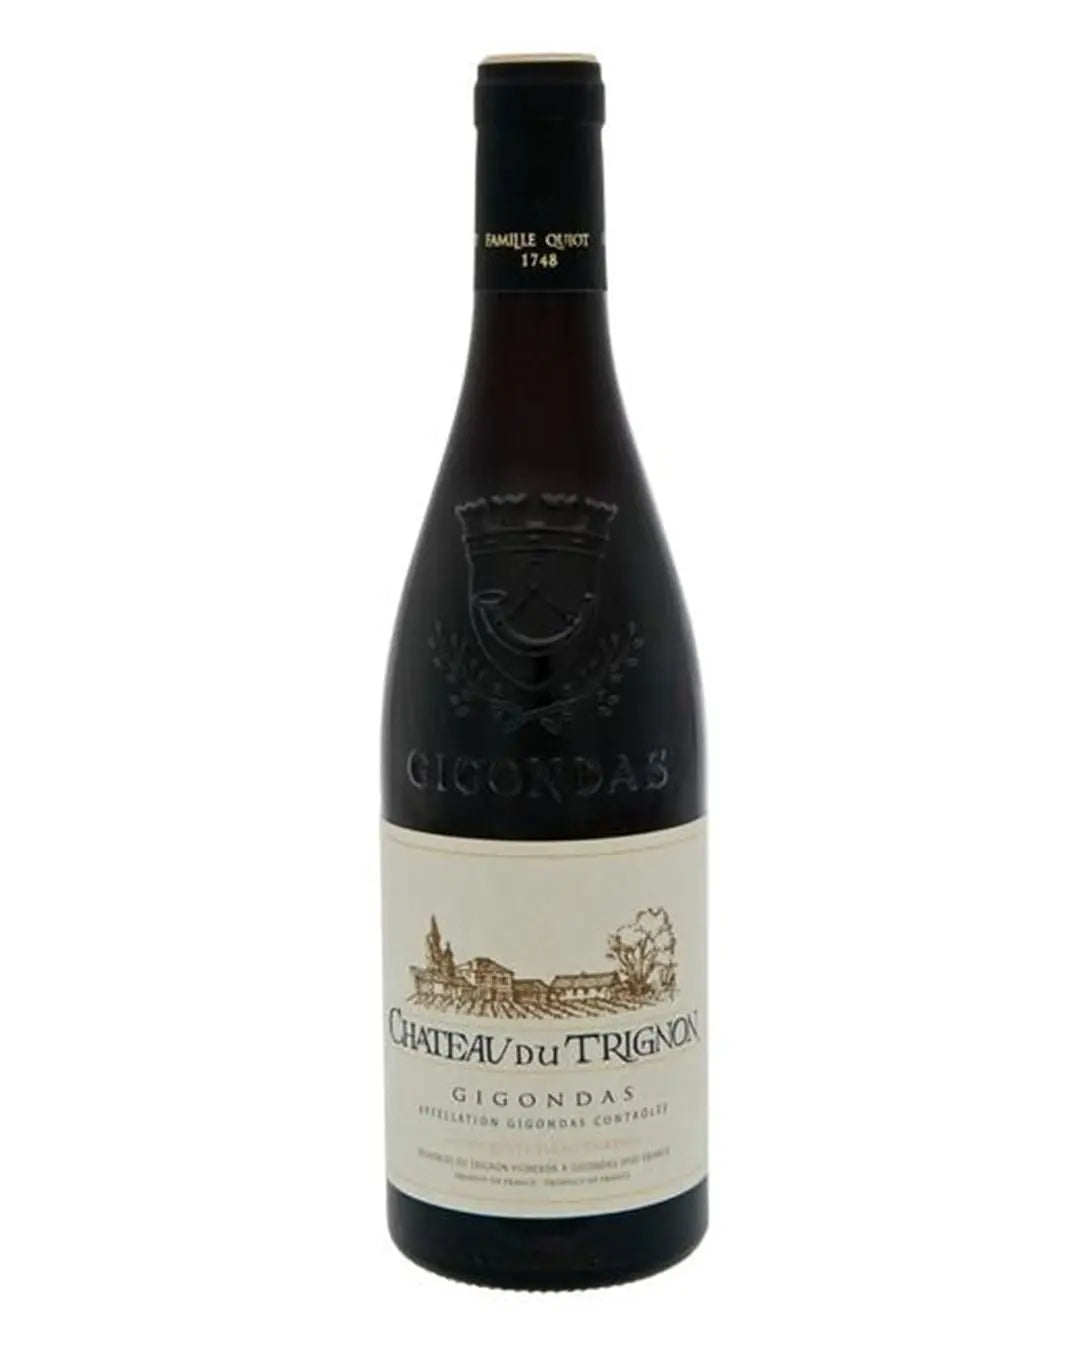 Gigondas, Chateau du Trignon 2015, 75 cl Red Wine